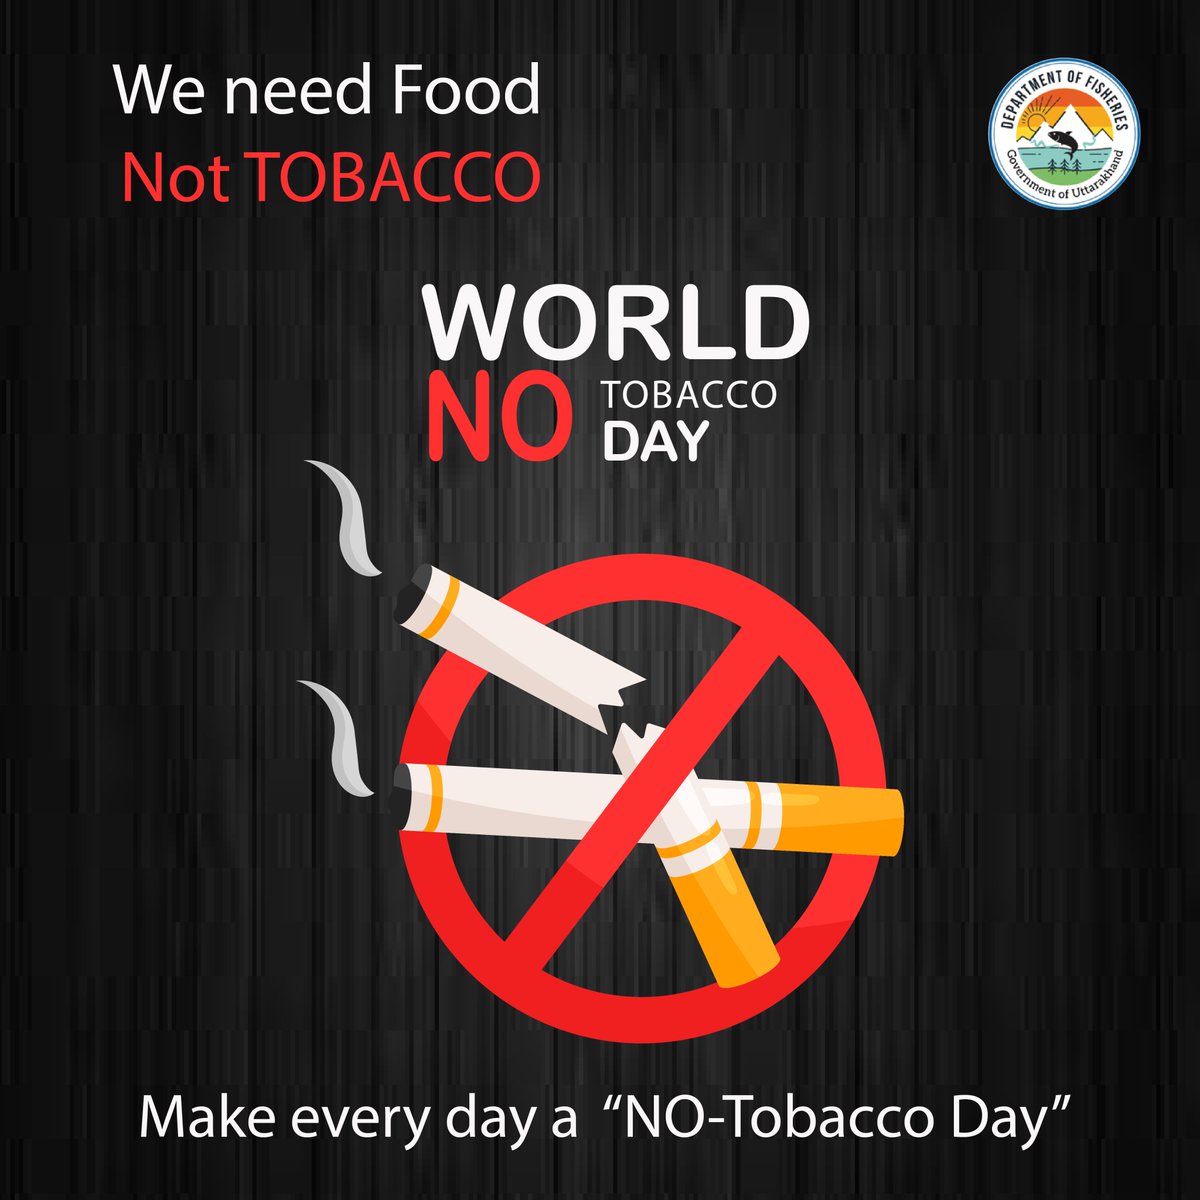 We need Food Not Tobacco